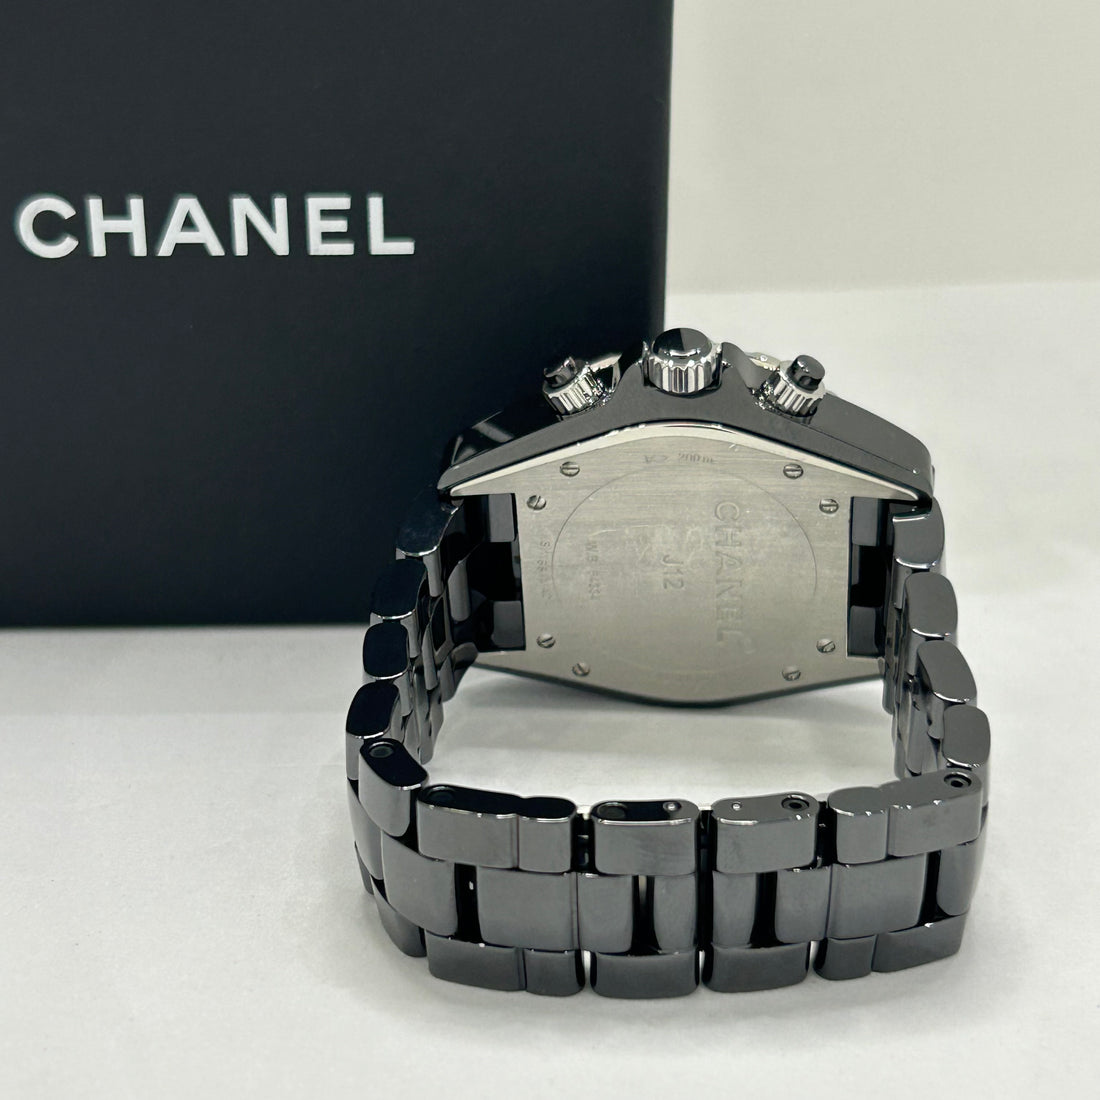 Chanel - J12 Chronographe